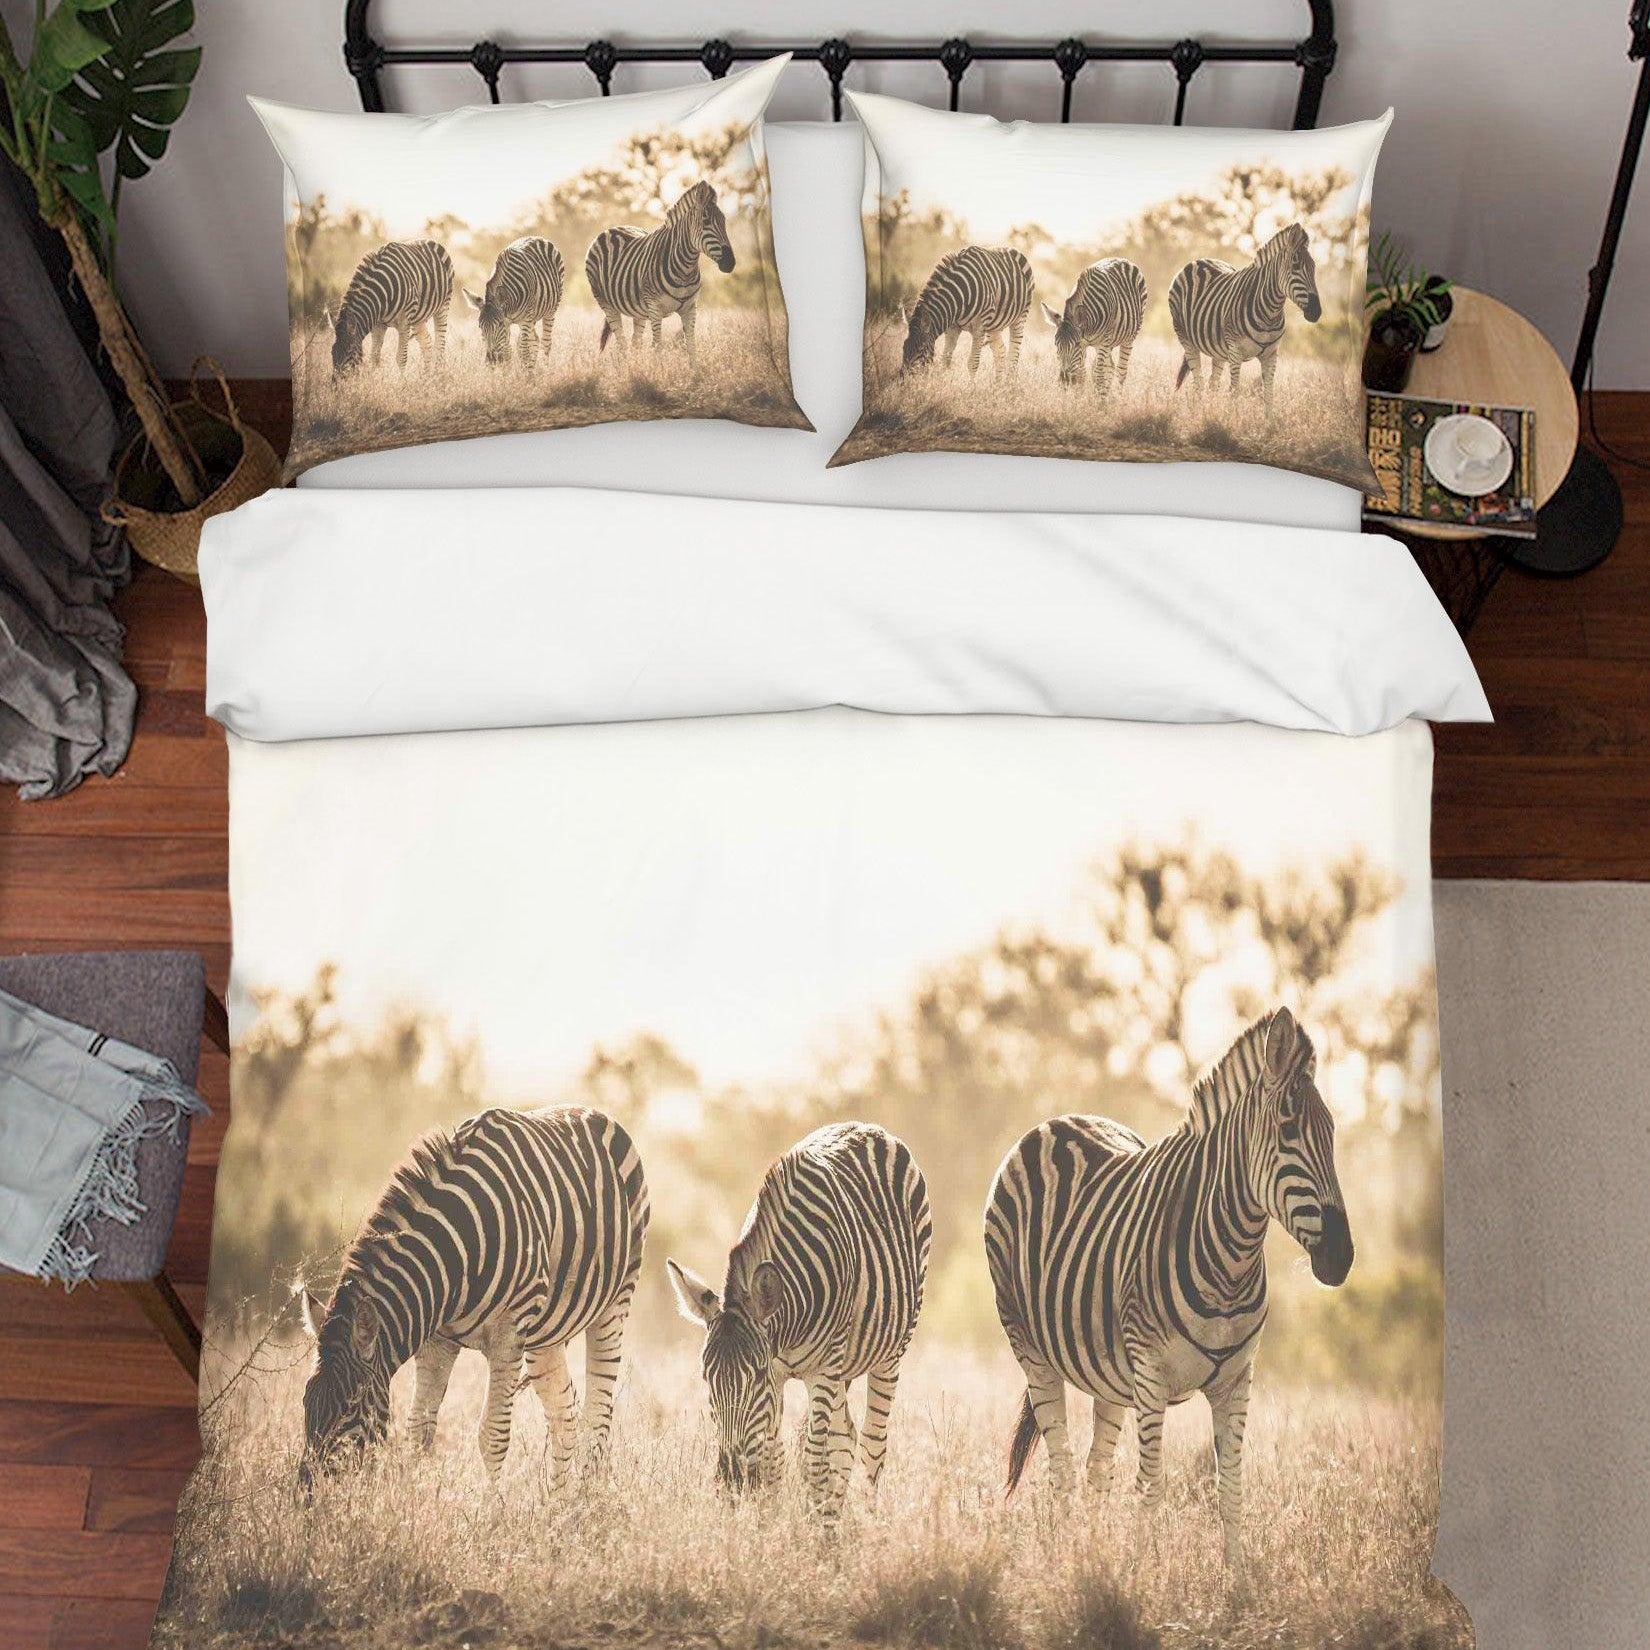 3D Zebra Grass Quilt Cover Set Bedding Set Pillowcases SF61- Jess Art Decoration